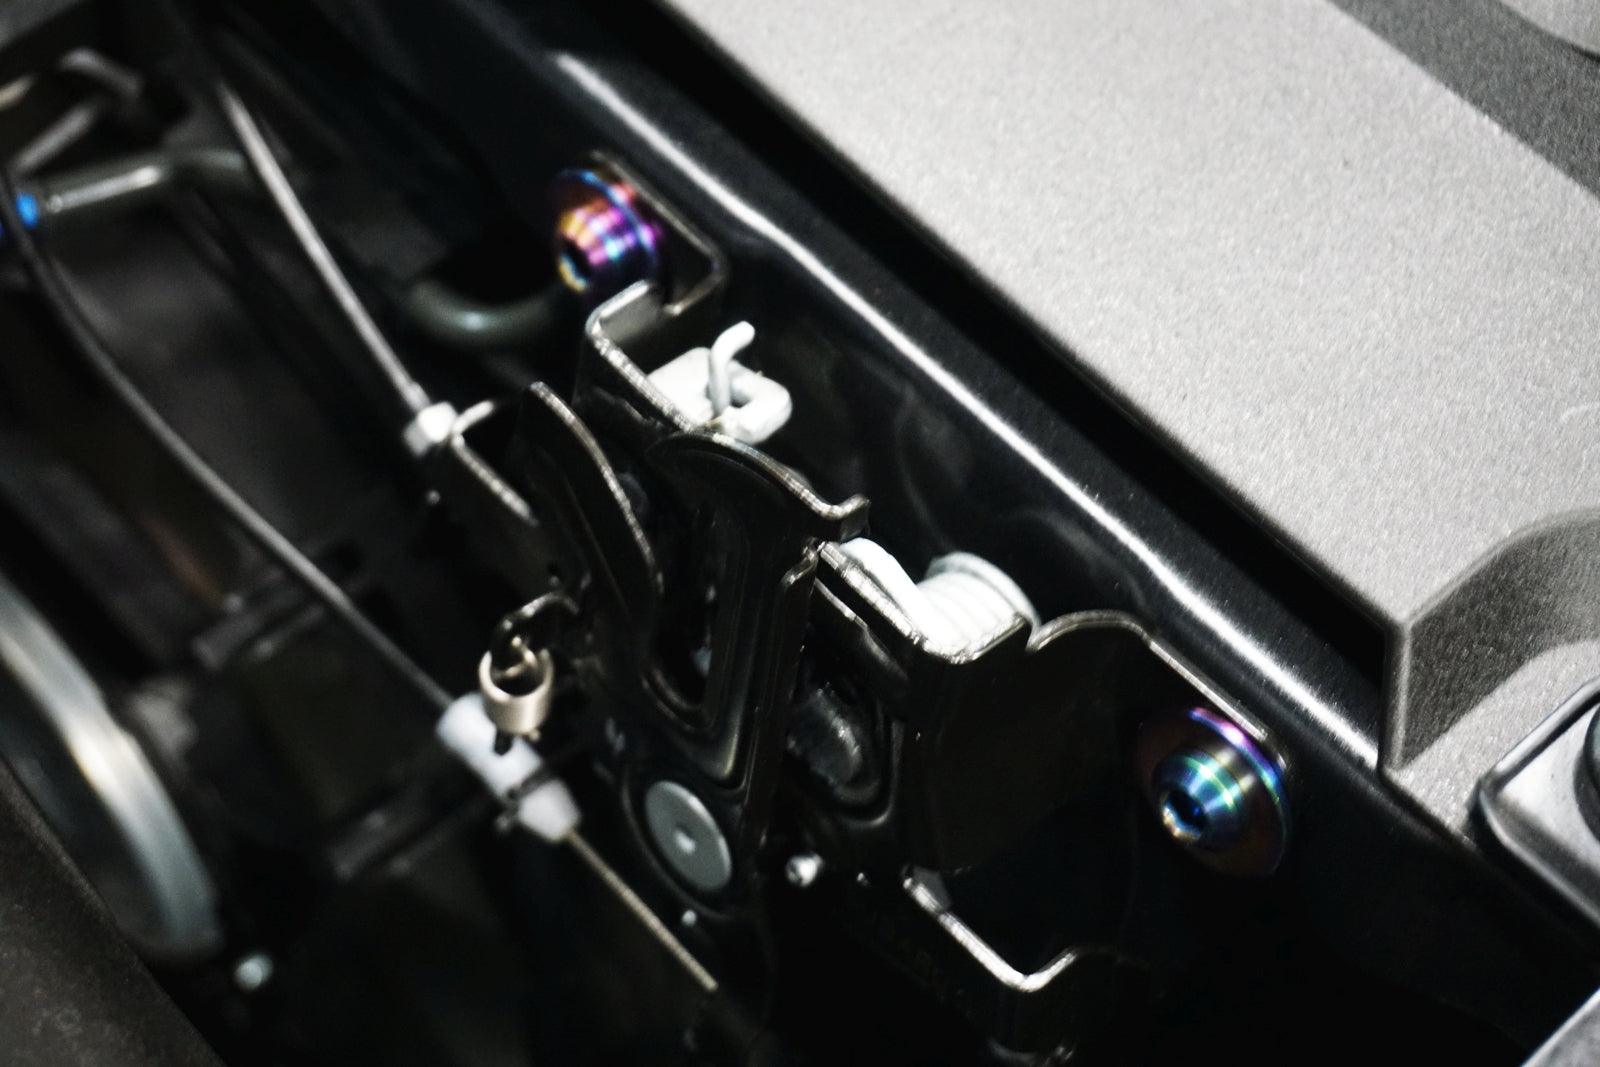 ZSPEC "Stage 2" Dress Up Bolts® Fastener Kit for '18-24 Subaru CrossTrek, Titanium  Keywords Engine Bay Upgrade Performance Merchandise Grade-5 GR5 Dress Up Bolts Hardware Design Car Auto JDM USDM